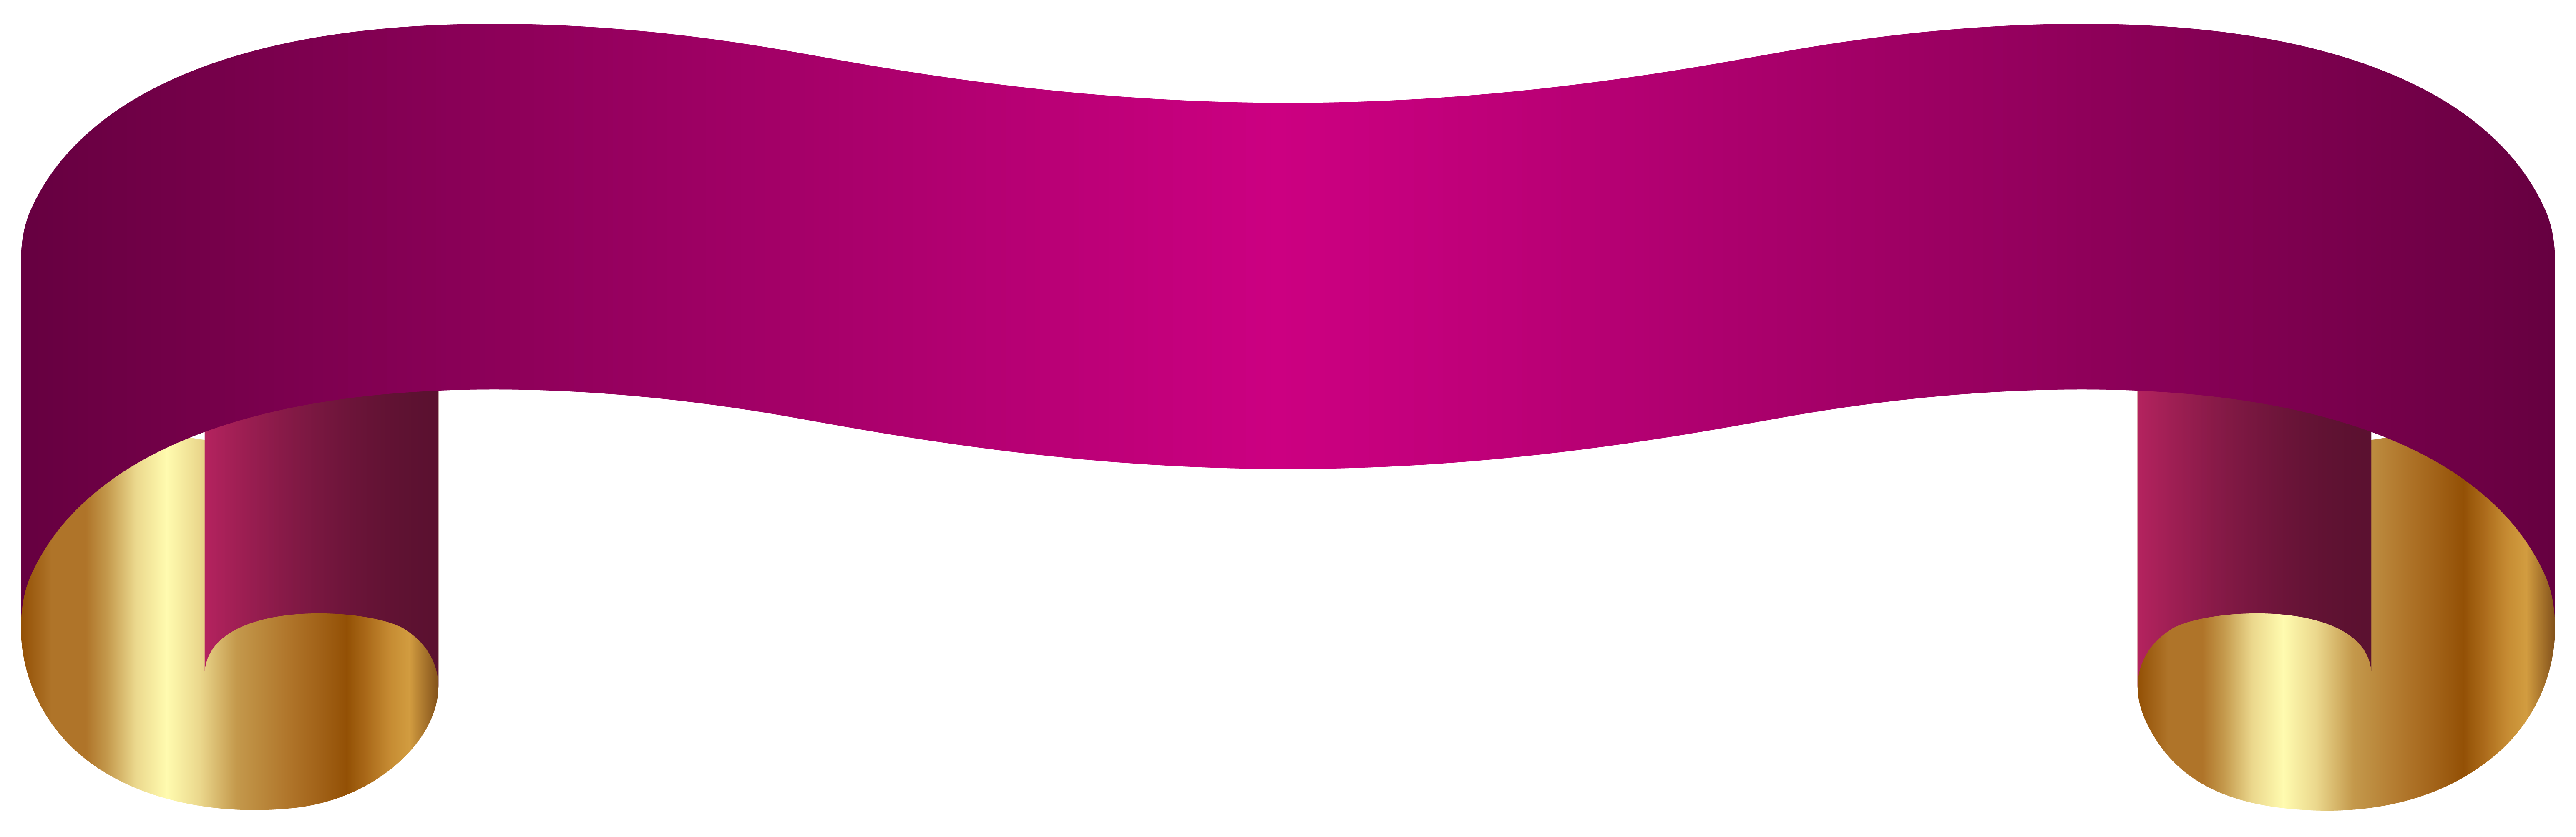 Banner violeta PNG Pic